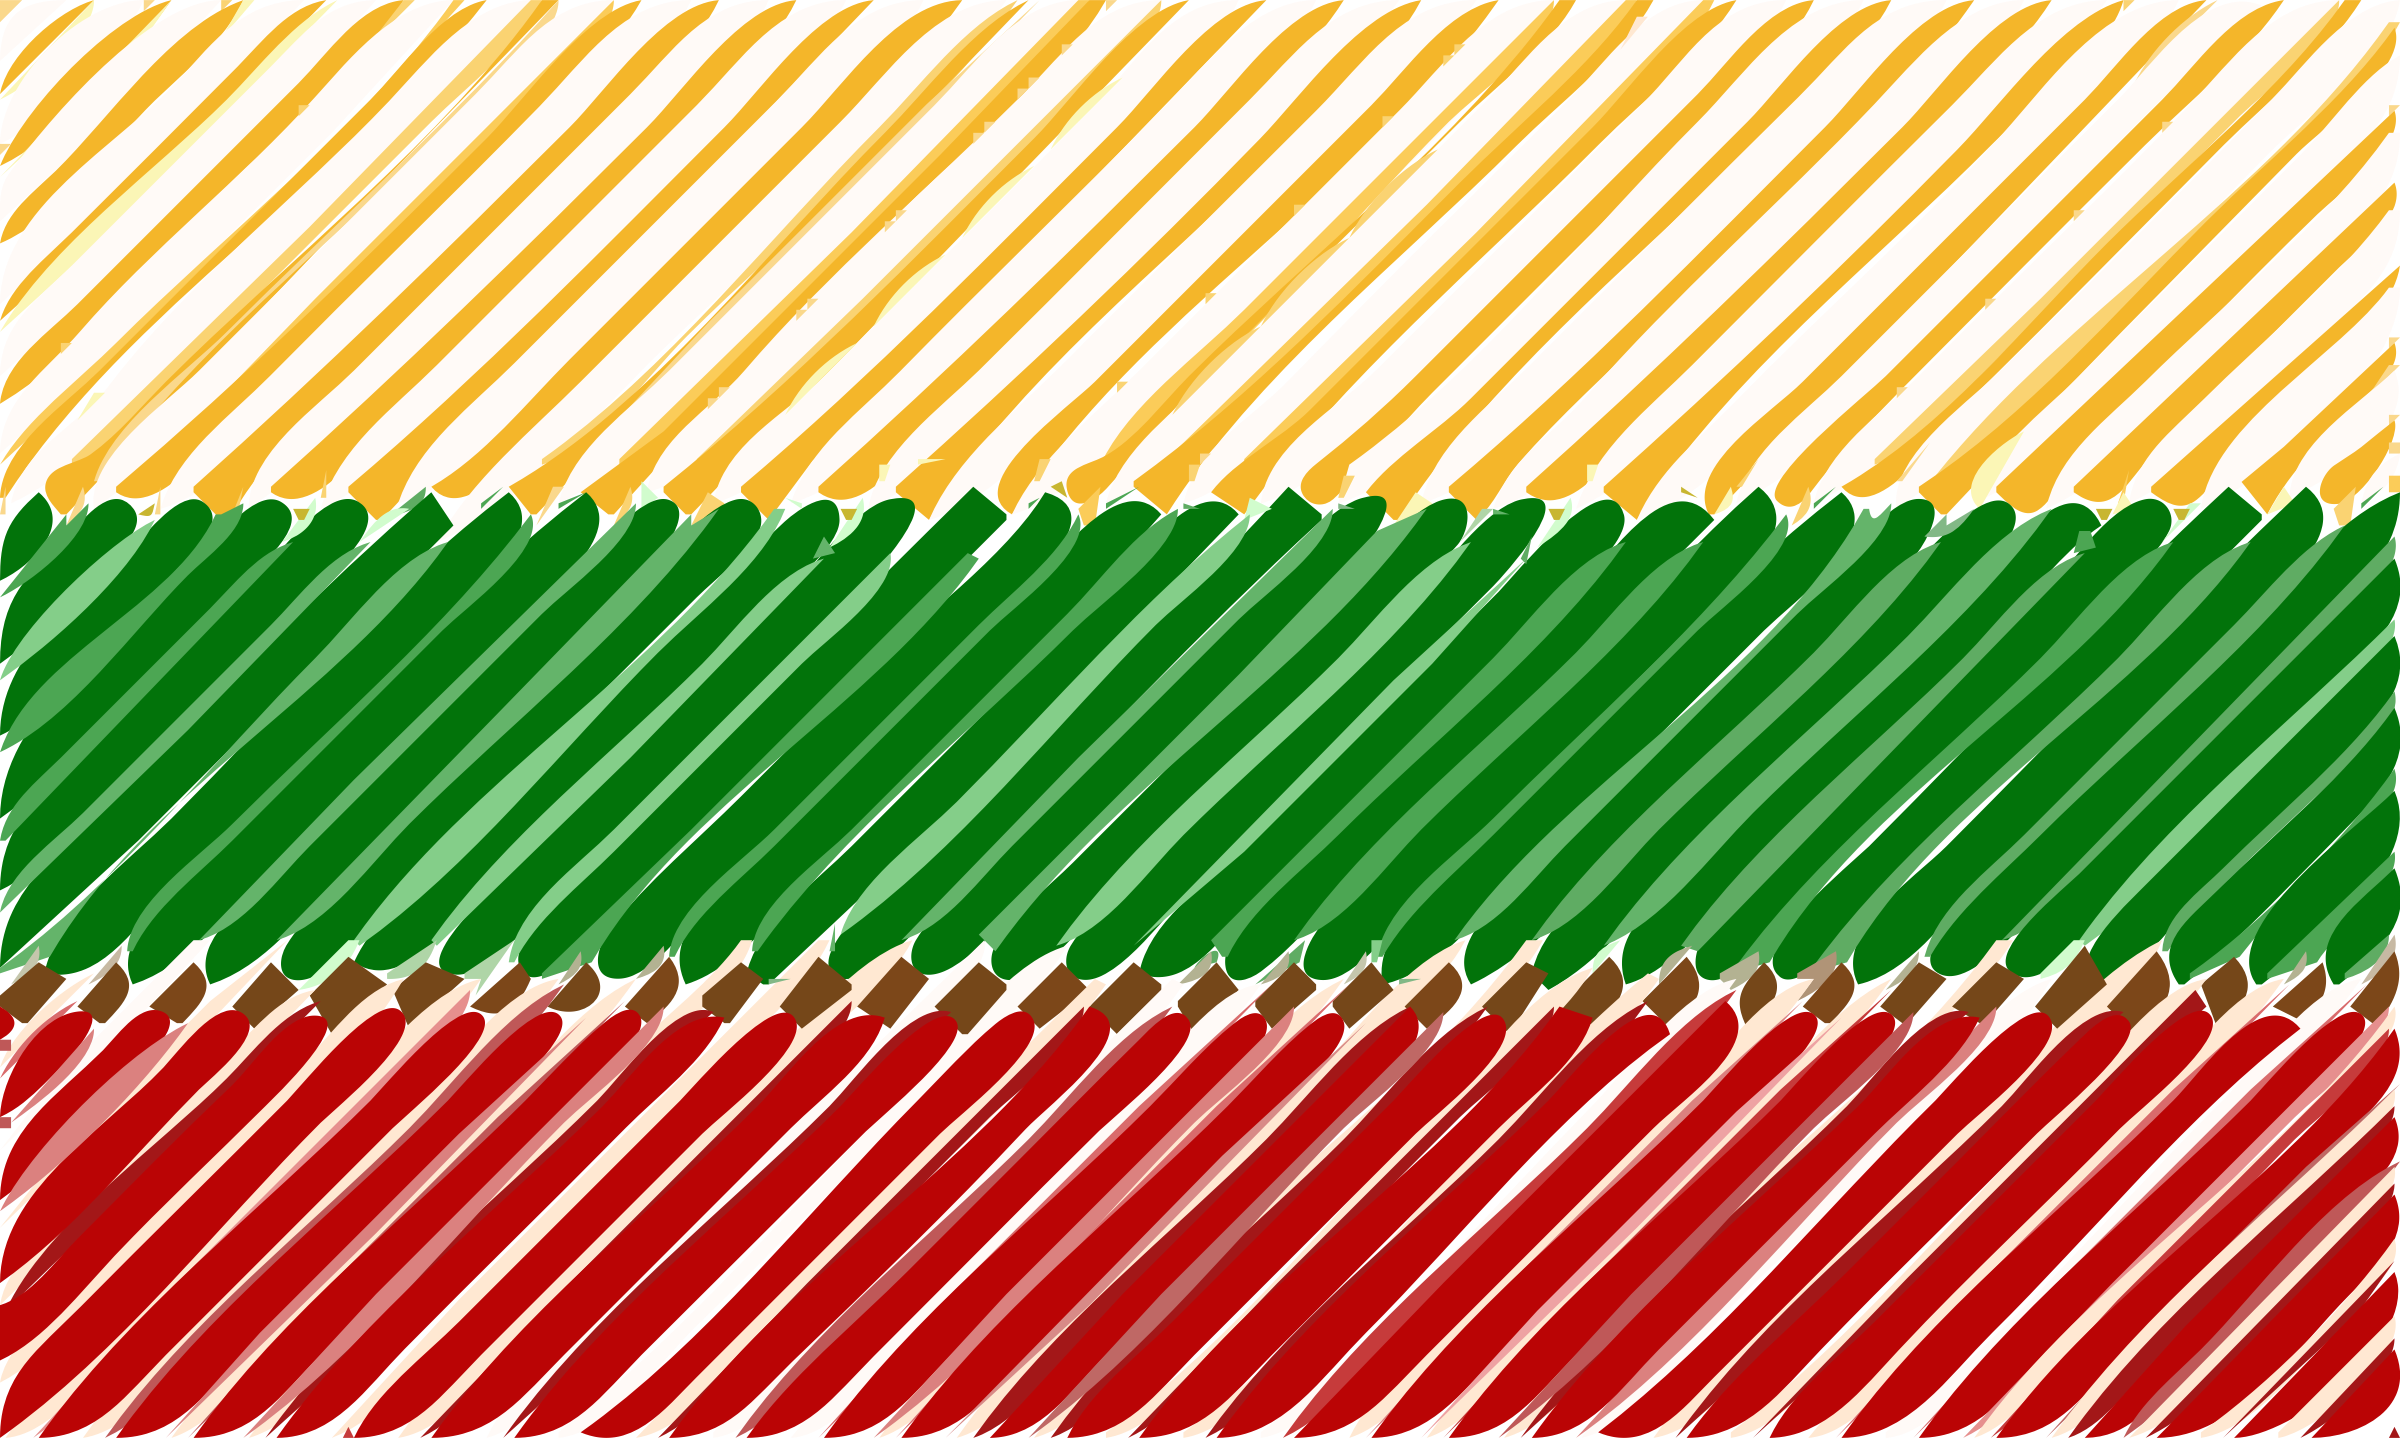 Lithuanian Flag Pencil Crayon Drawing